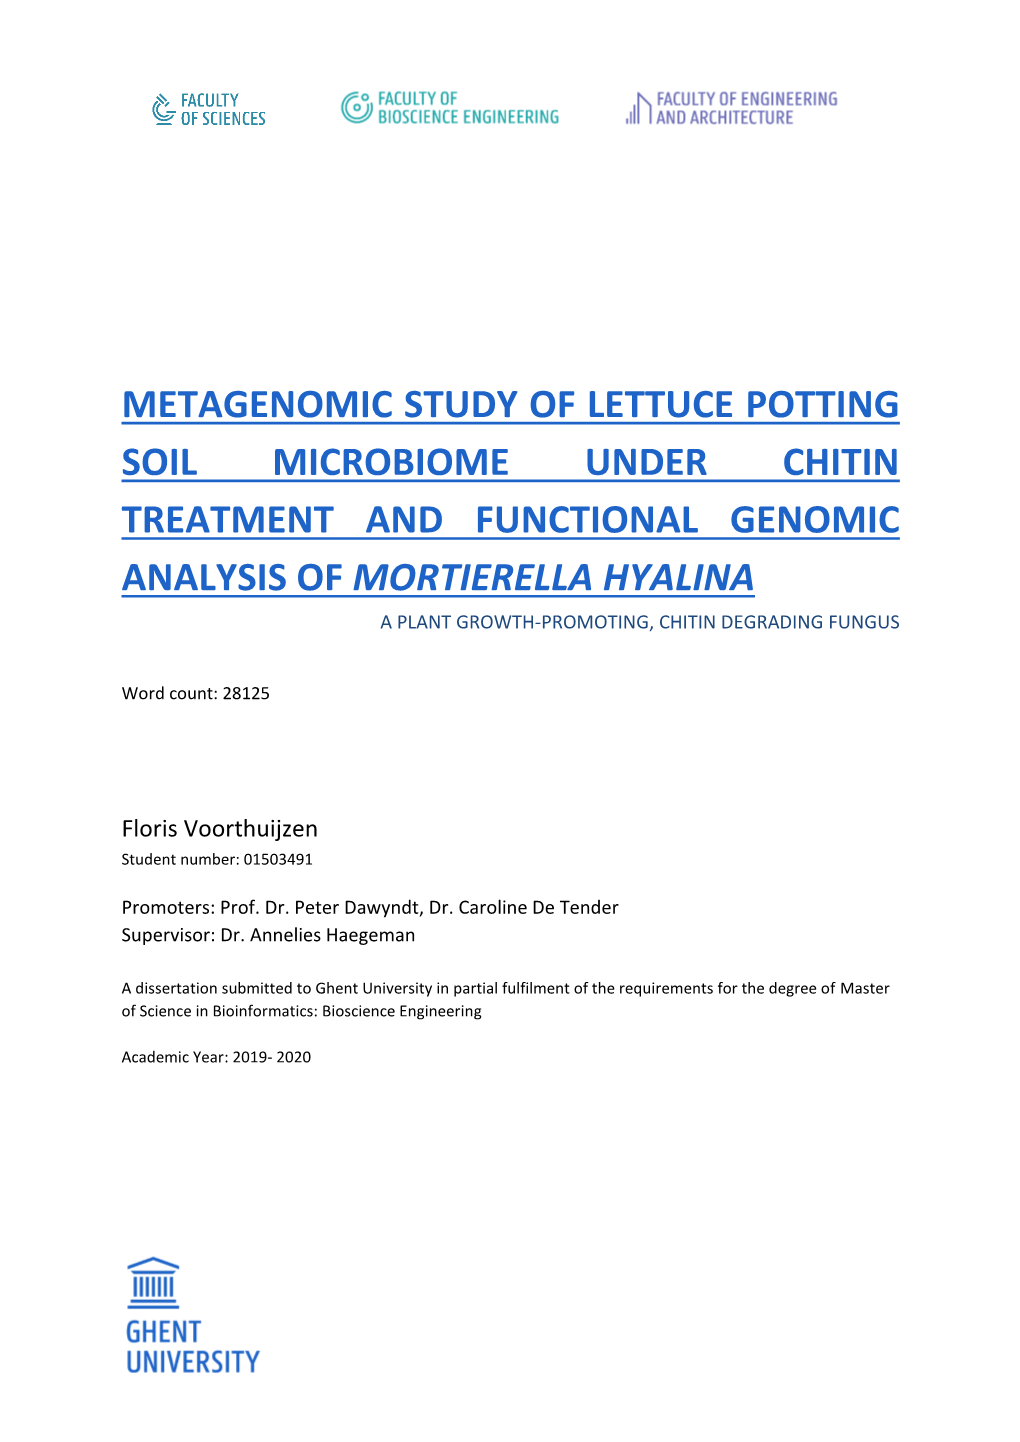 Metagenomic Study of Lettuce Potting Soil